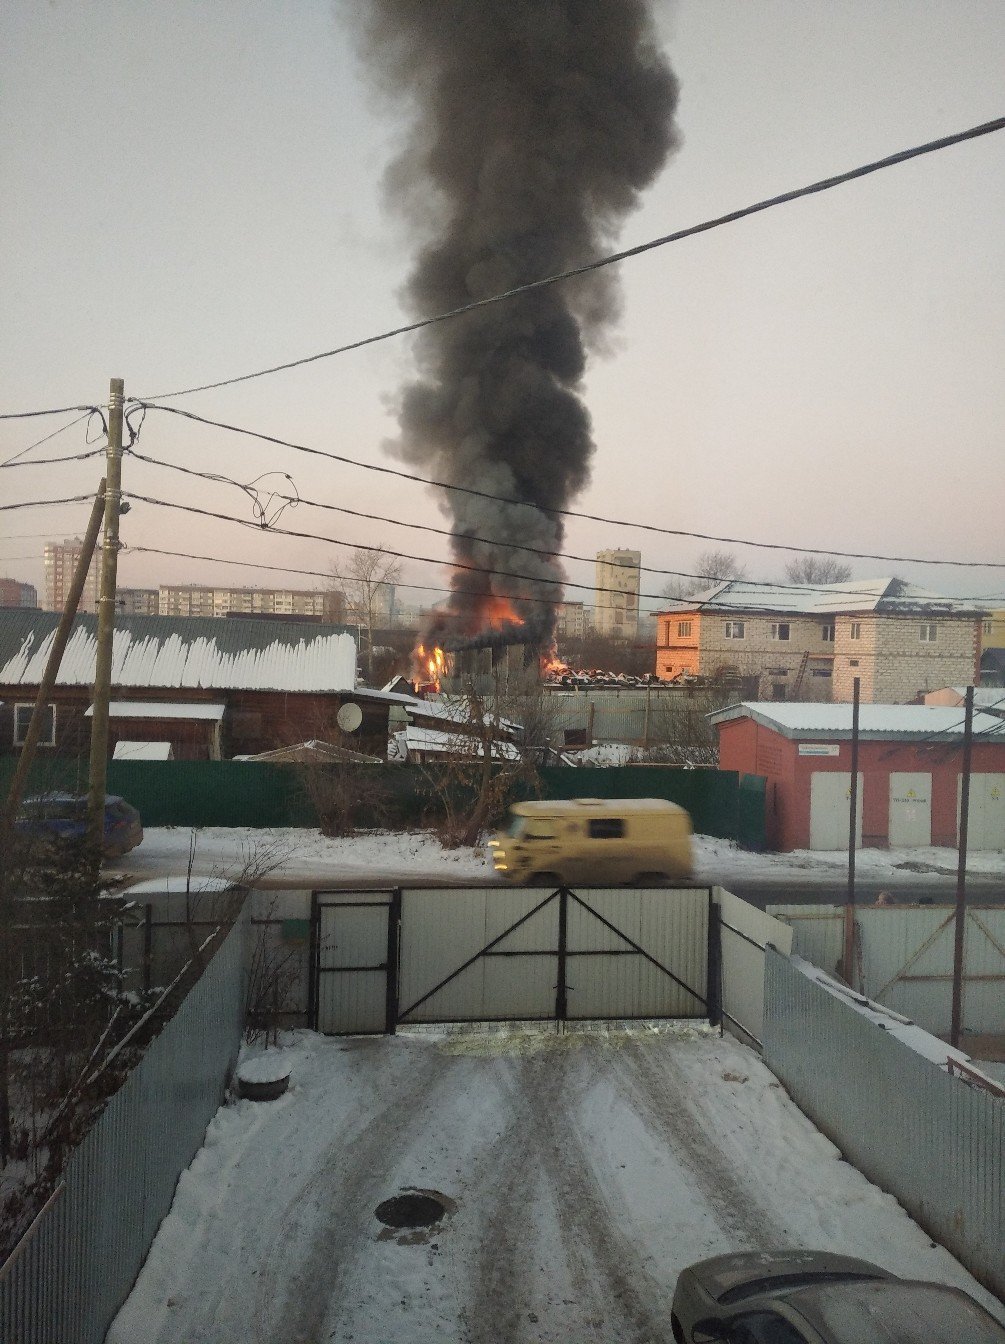 Авторазбор горит в районе «болота» в Ижевске